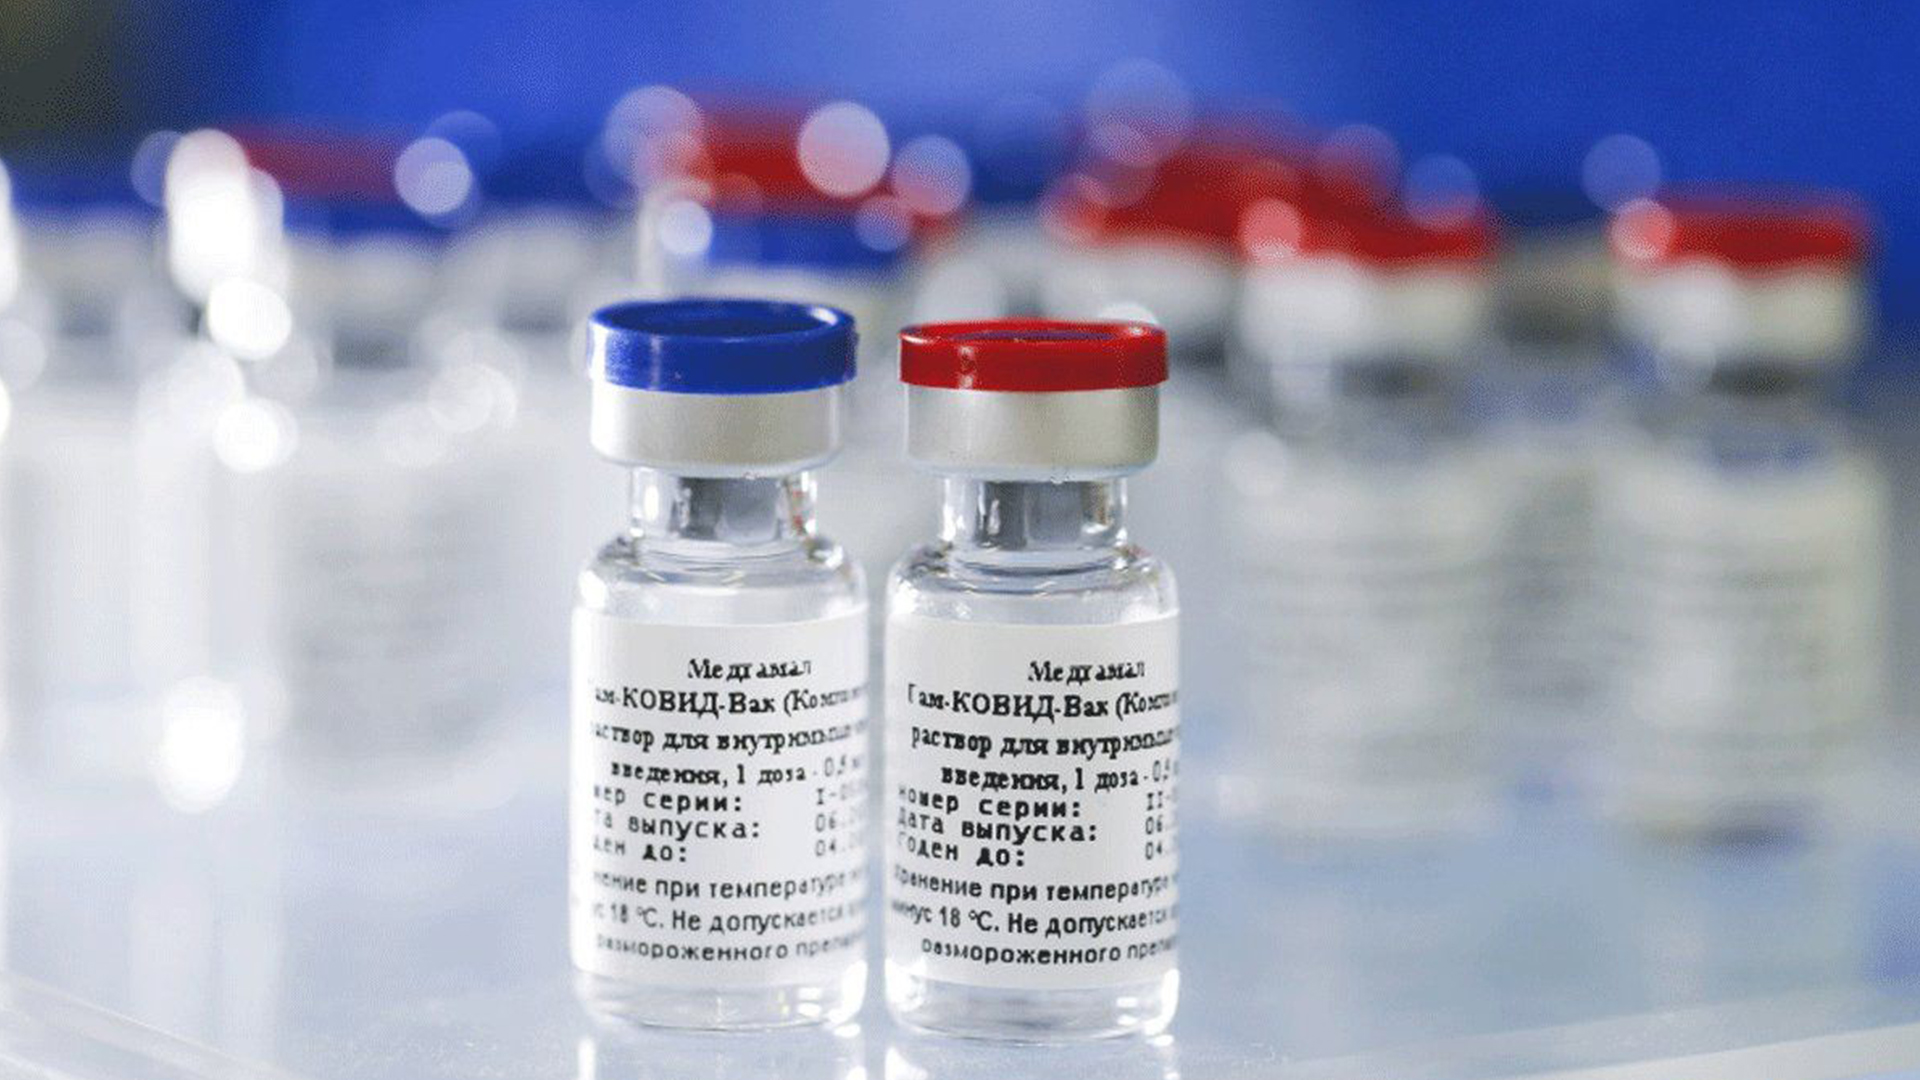 Coronavirus: Russia releases its ‘Sputnik V’ COVID-19 vaccine into public, regional deliveries to start soon